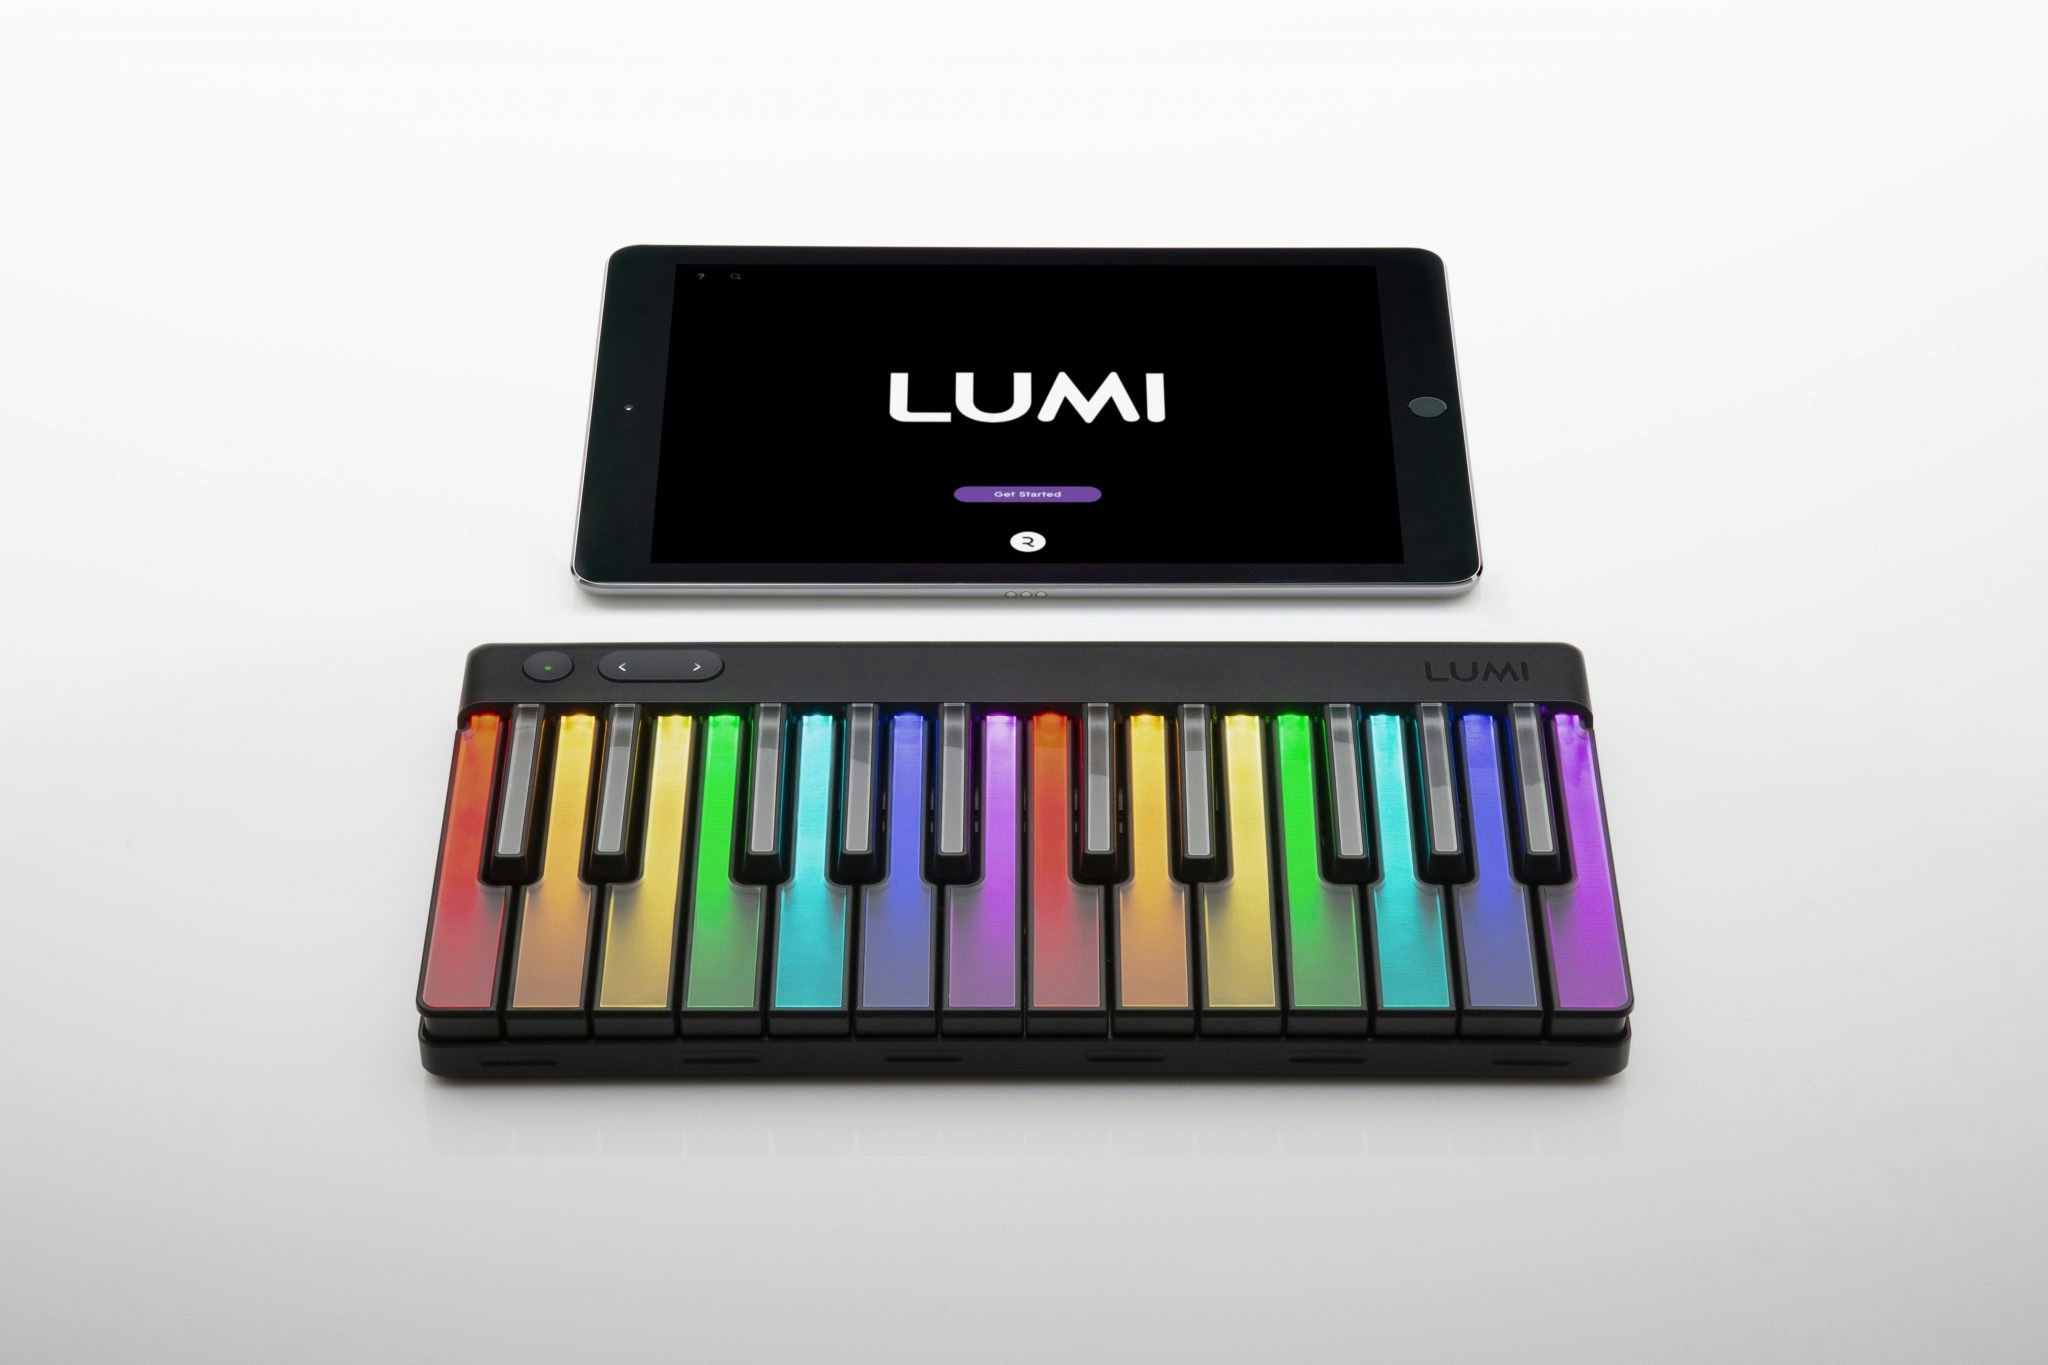 Photo of Roli's latest product, the Lumi keyboard.